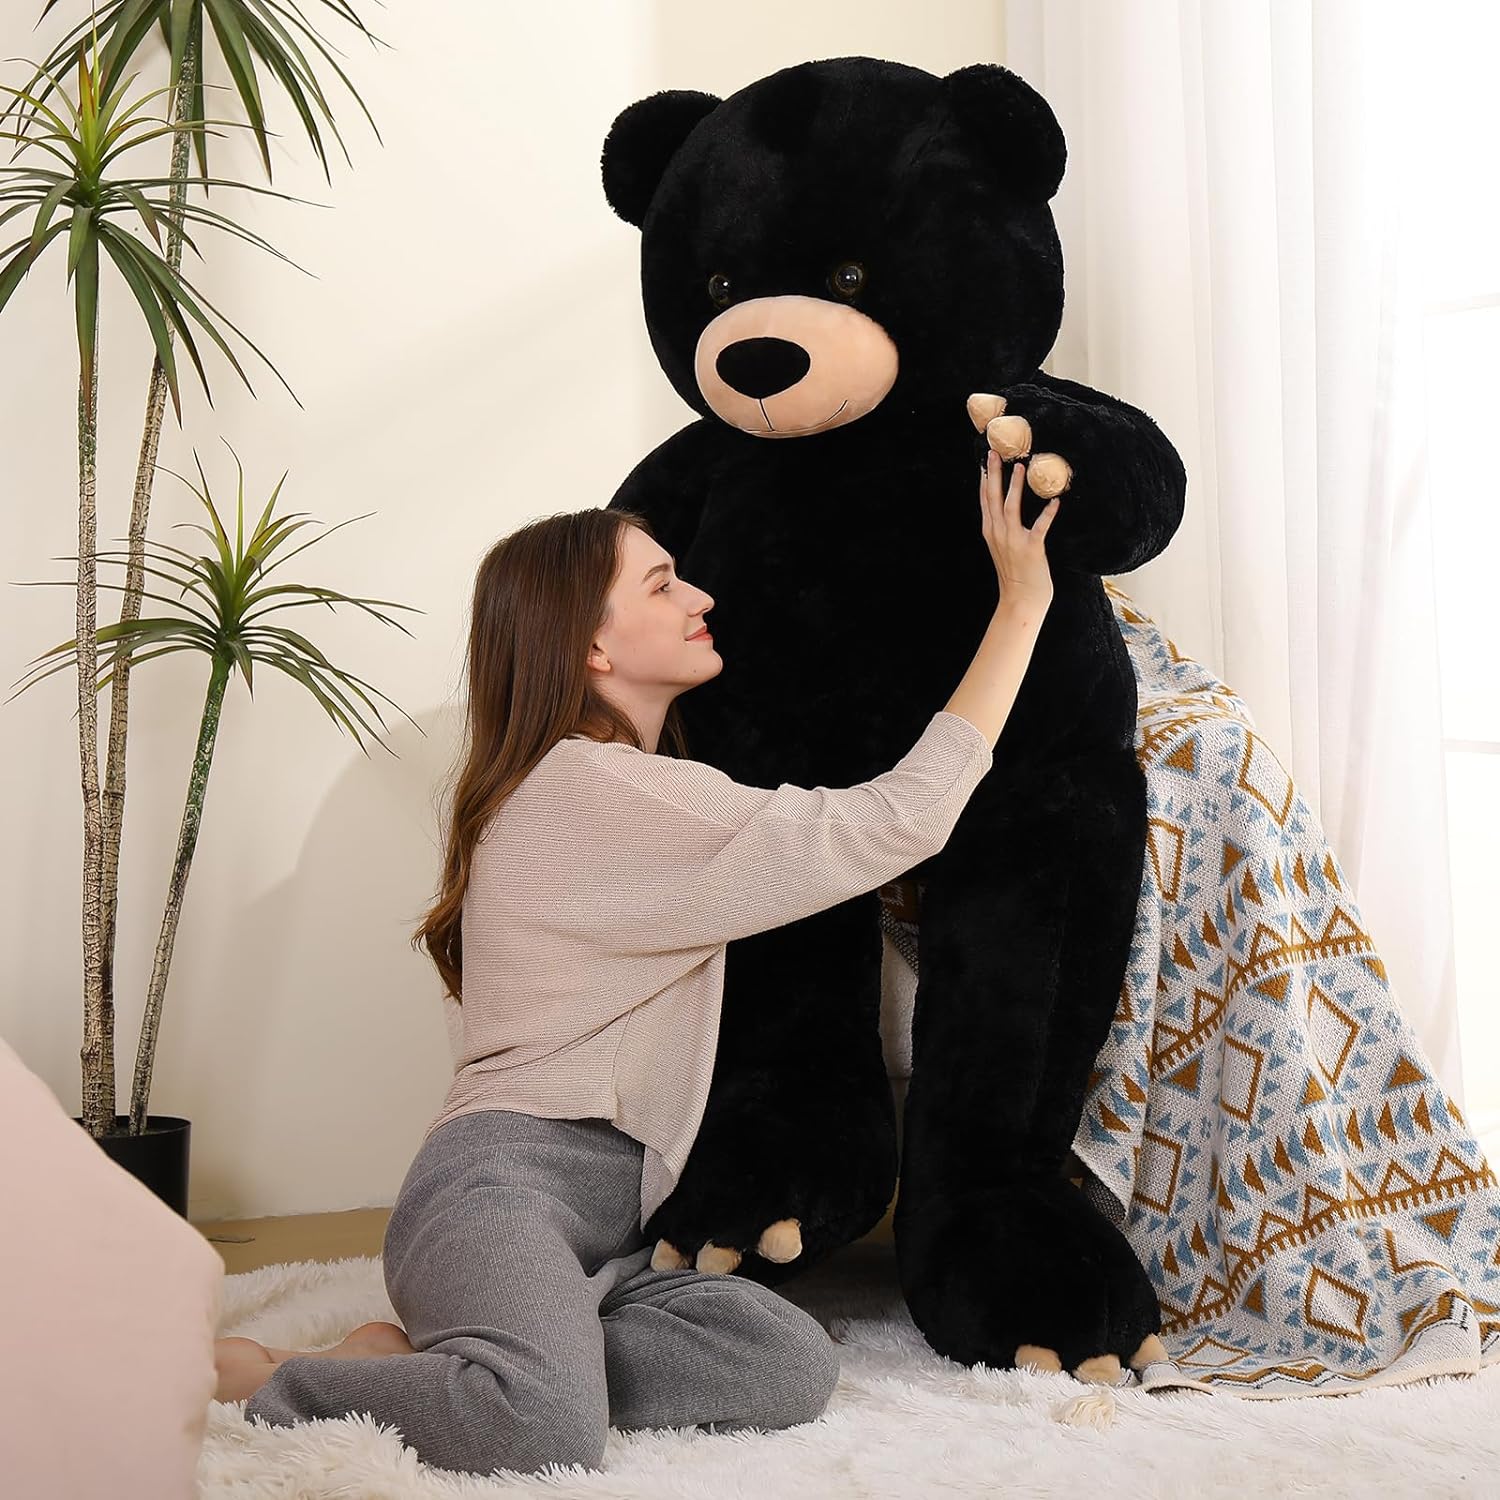 Large Teddy Bear Plush Toy, Black, 59 Inches